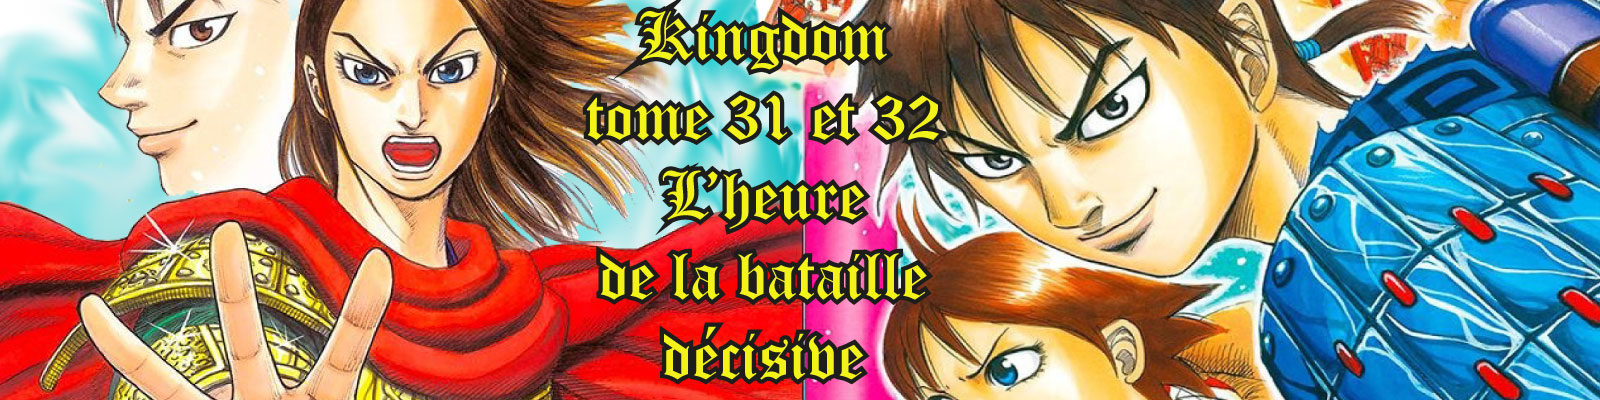 Kingdom 31